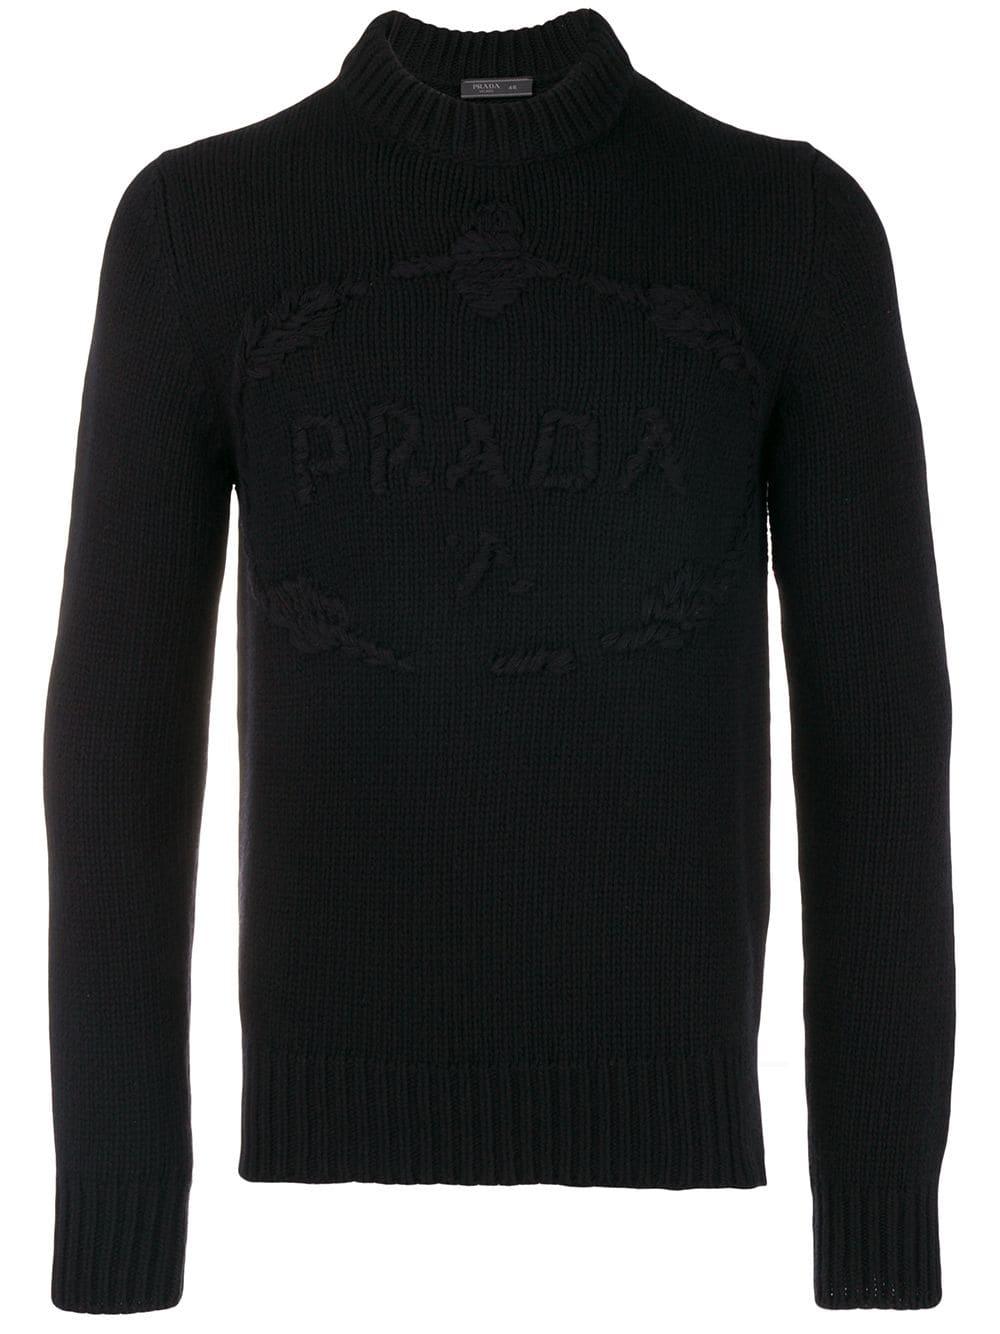 Prada Wool Embroidered Logo Knit Jumper in Black for Men - Lyst